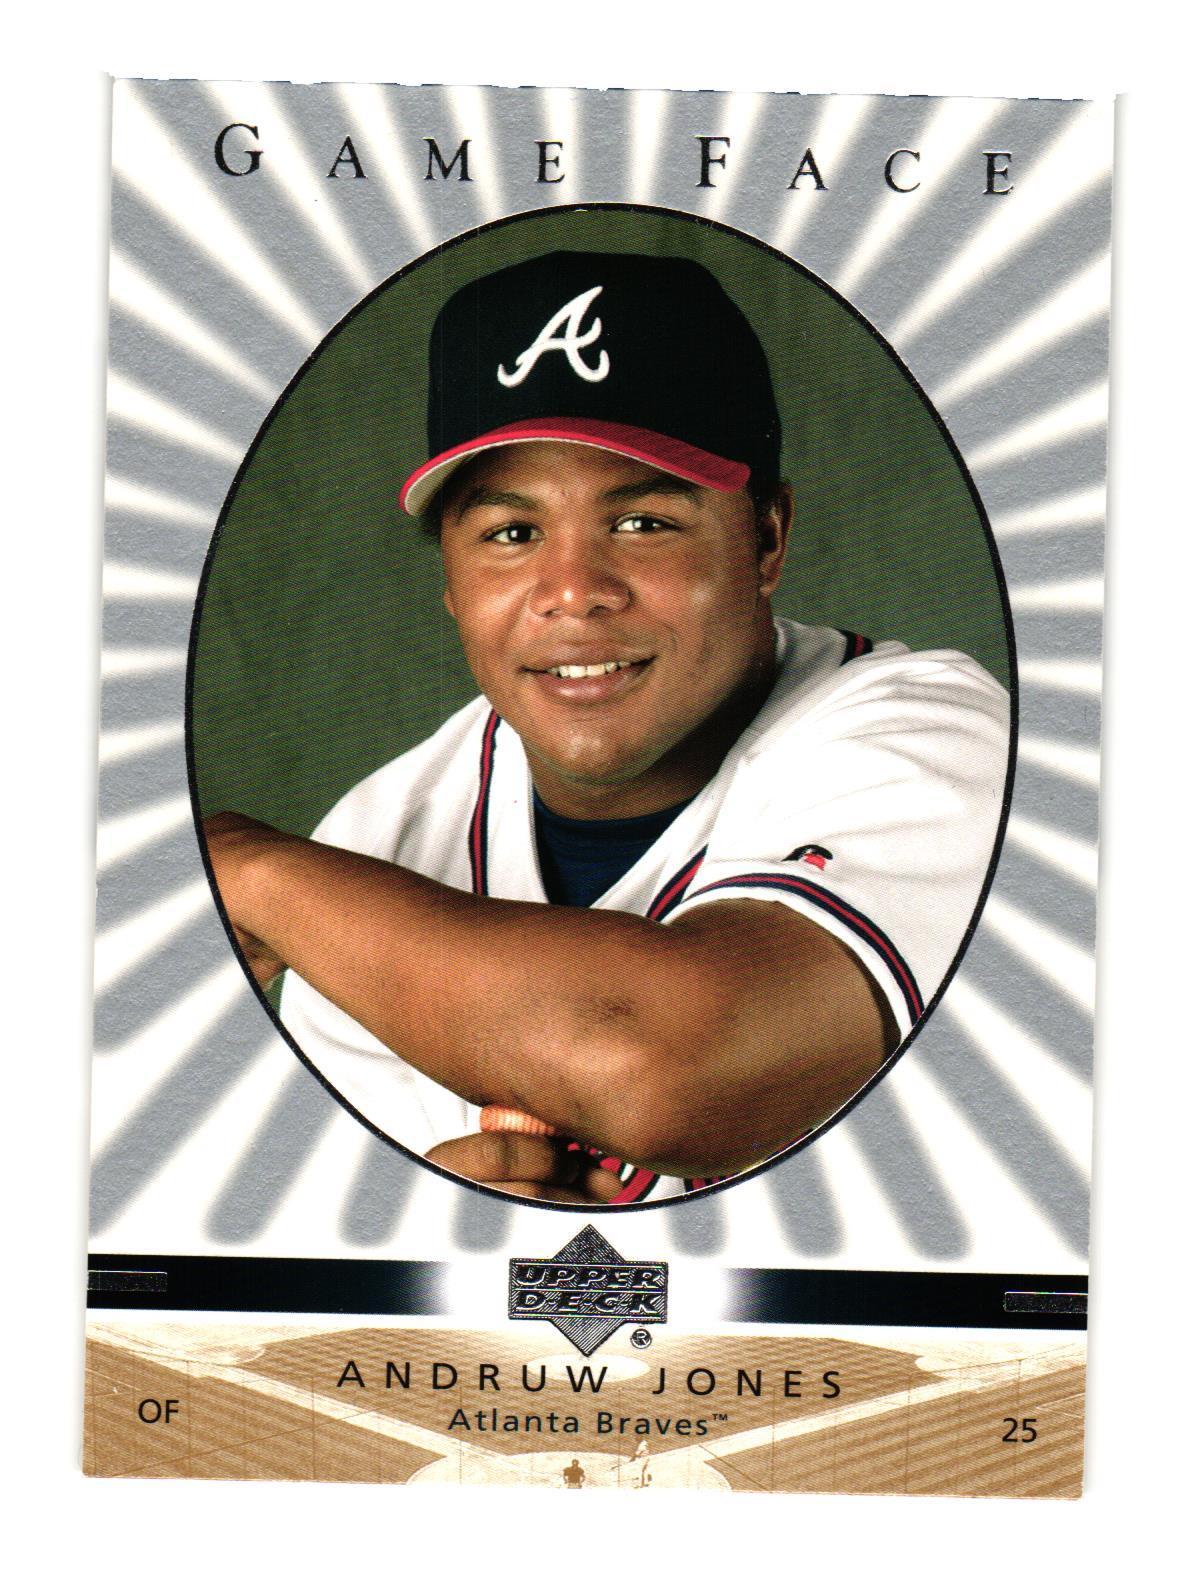 Primary image for 2003 Upper Deck Game Face #10 Andruw Jones Atlanta Braves